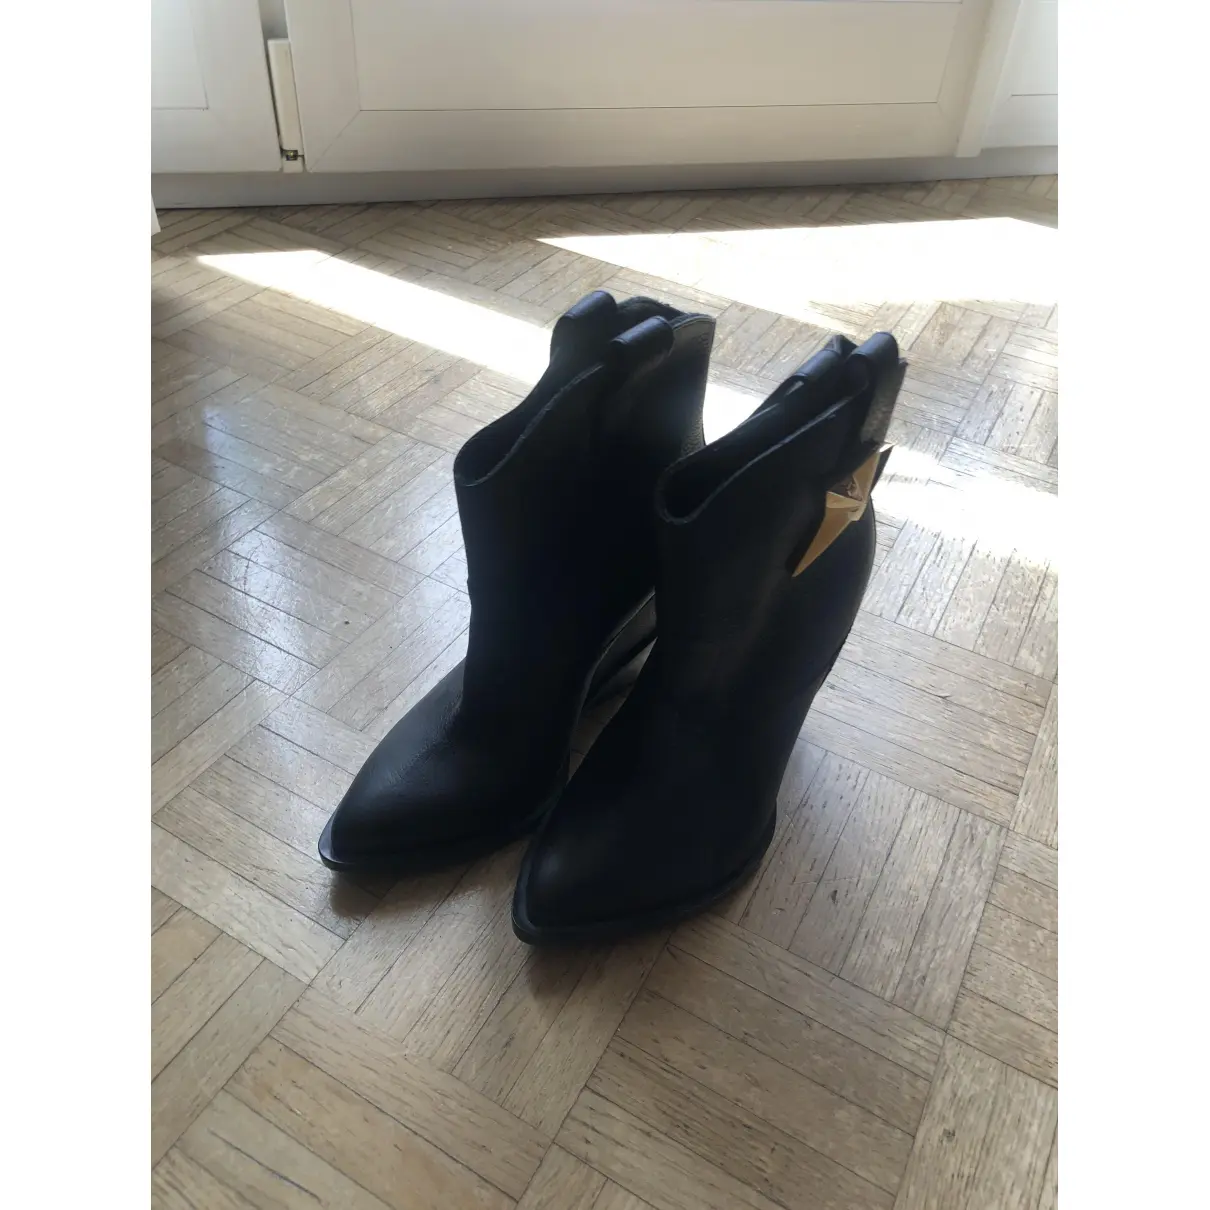 Leather western boots Giuseppe Zanotti